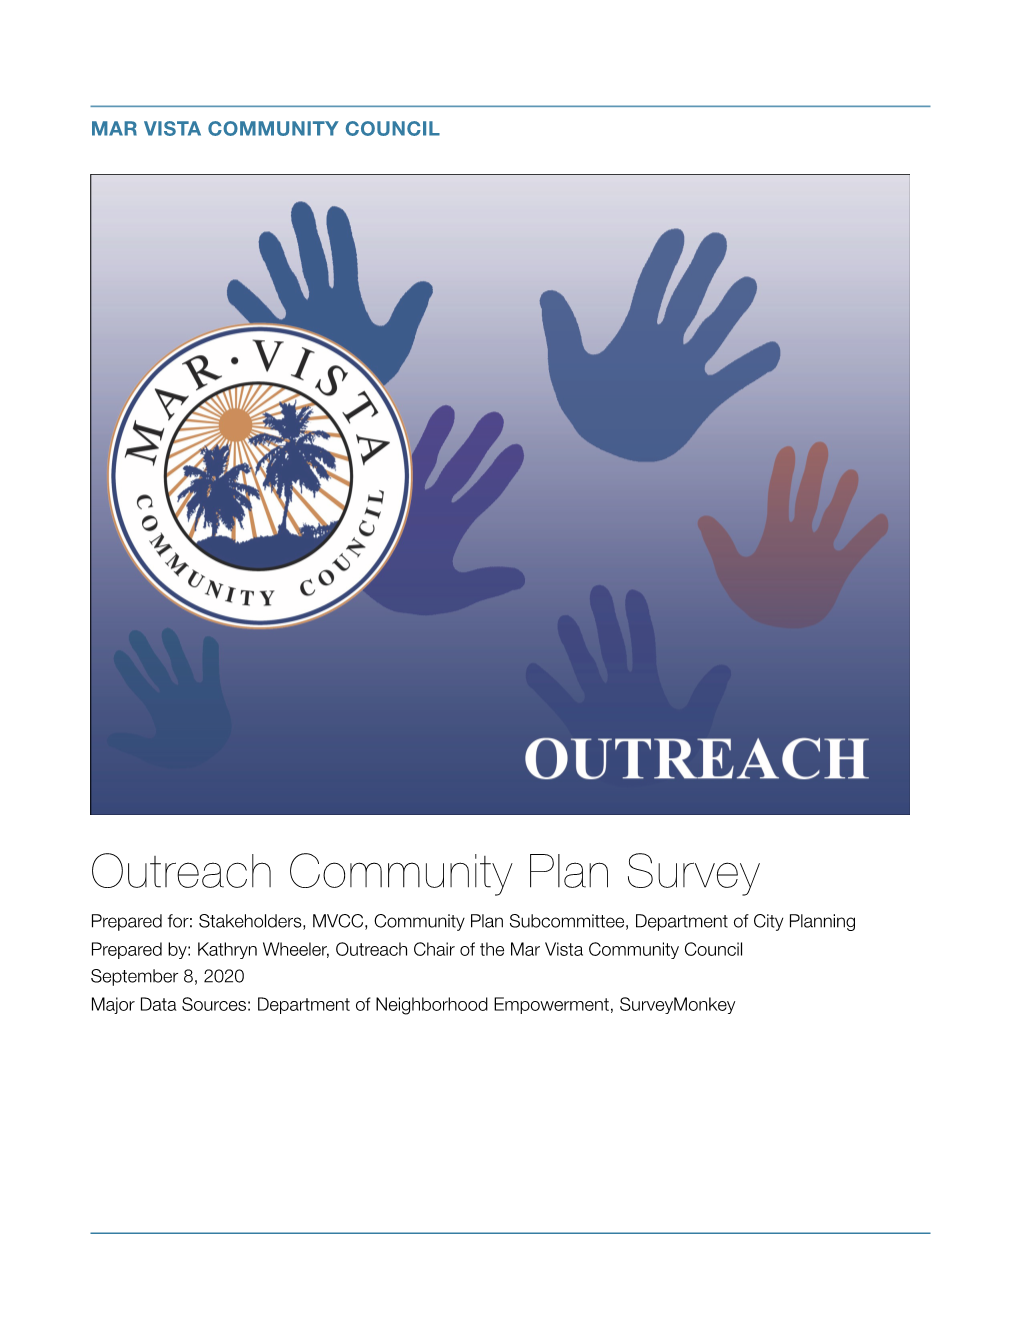 Outreach Community Plan Survey, September 8, 2020